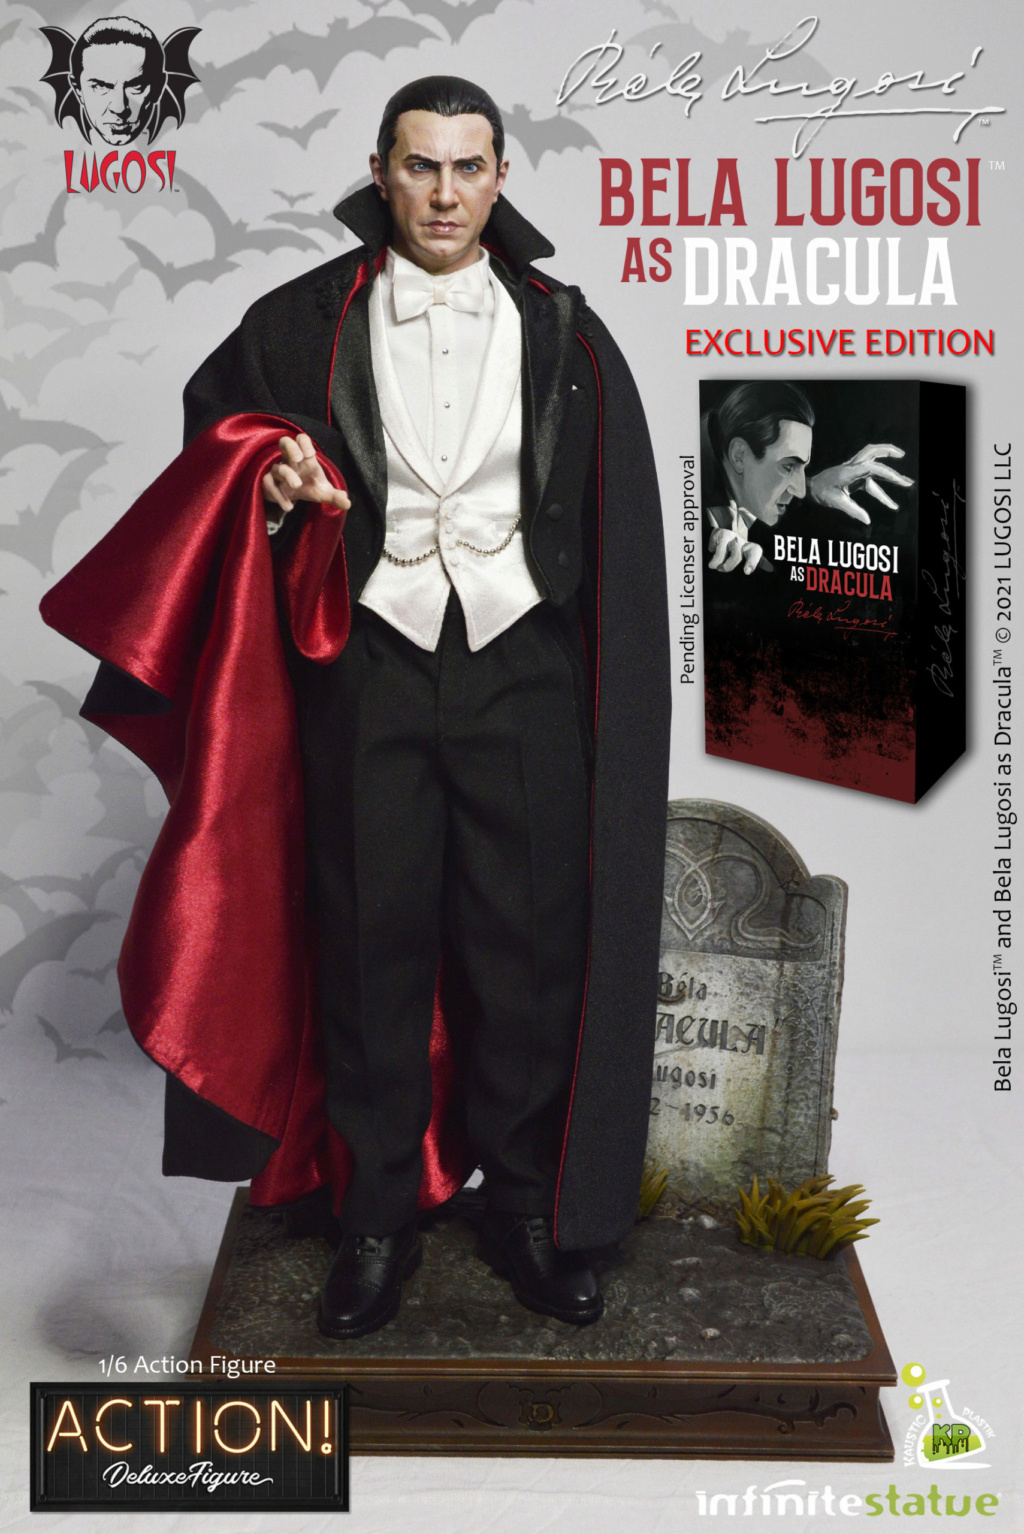 InfiniteStatue - NEW PRODUCT: Kaustic Plastik & Infinite Statue: Bela Lugosi as Dracula (standard, deluxe & exclusive) action figure 2894